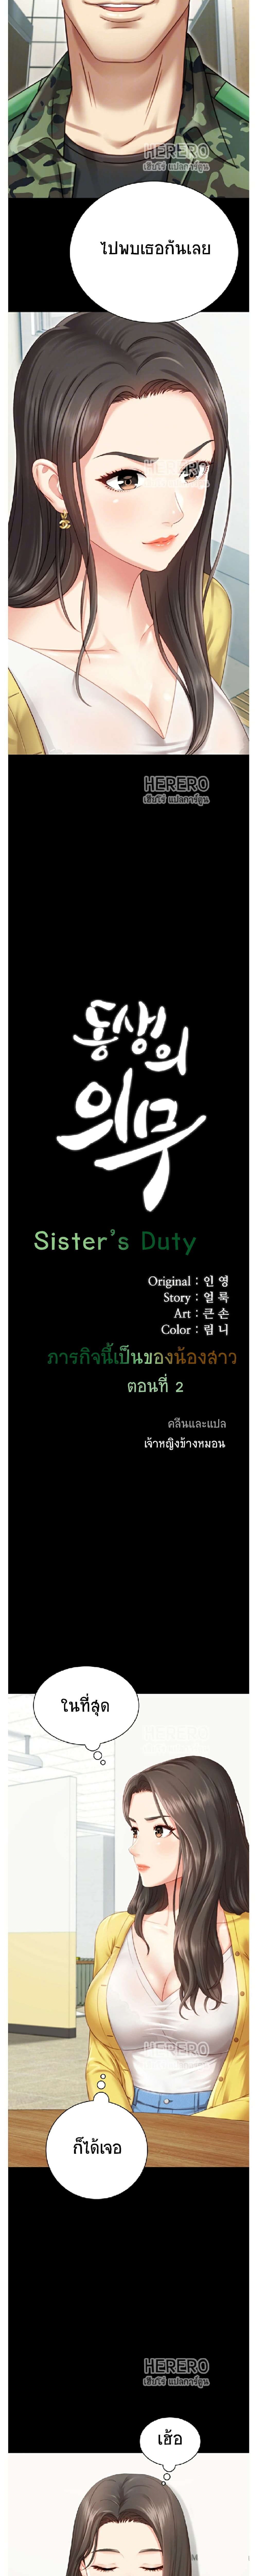 My Sister’s Duty 2 02